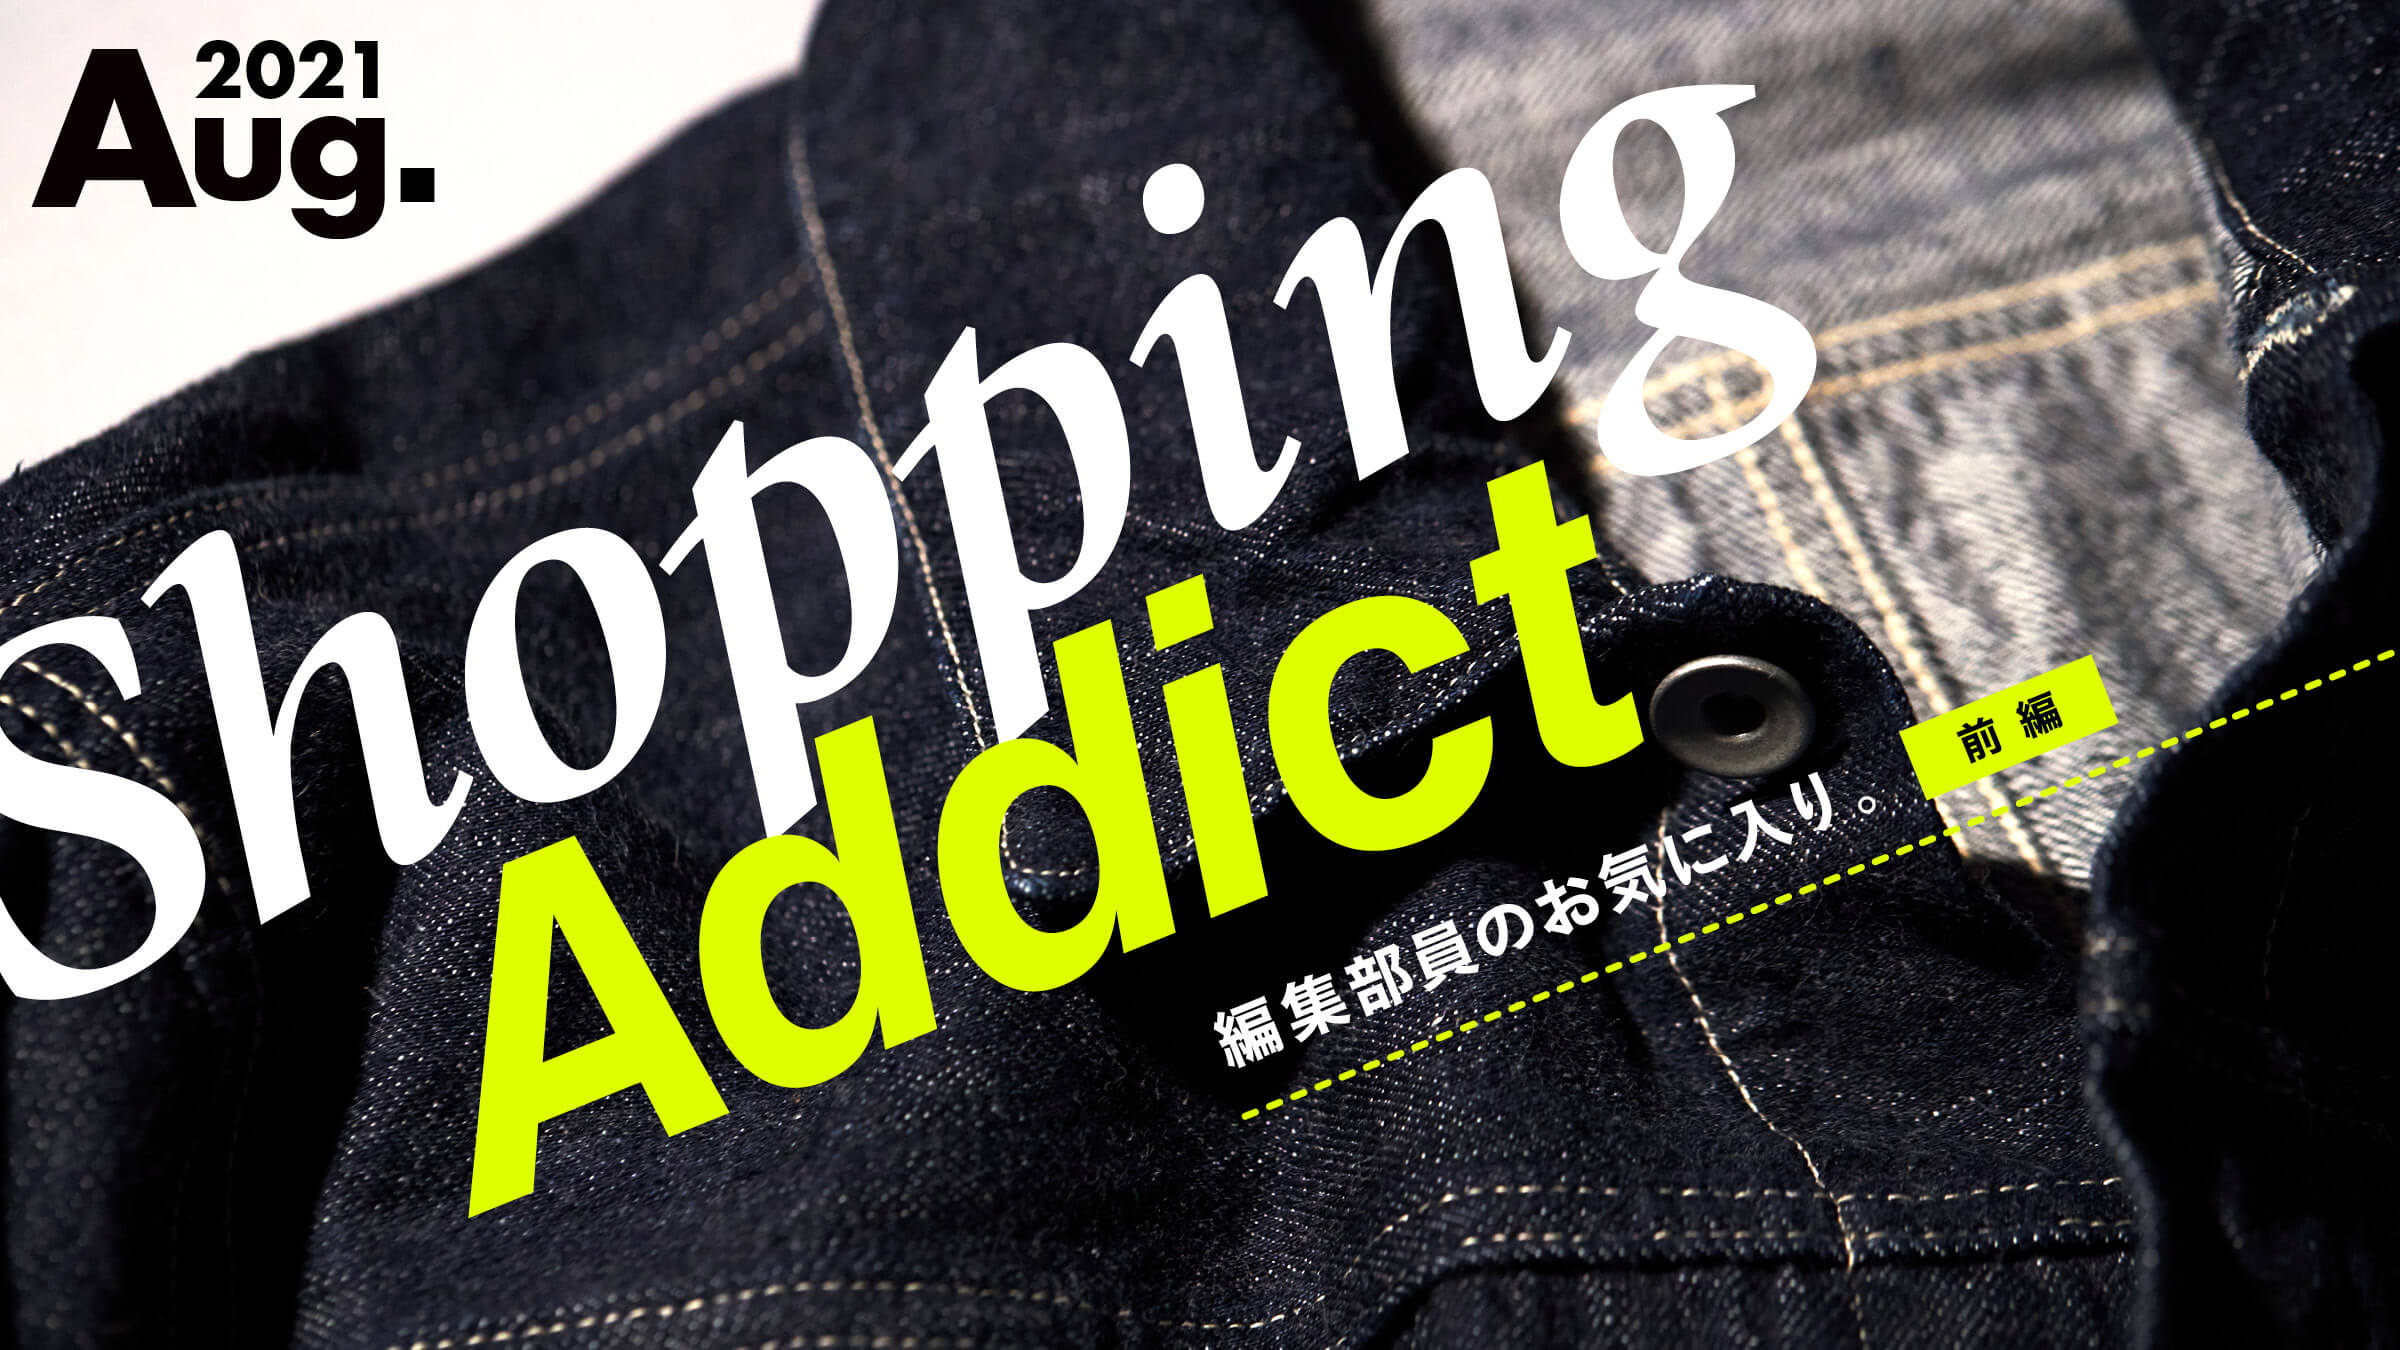 Shopping Addict 2021 Aug. 〜編集部員のお気に入り〜 前編